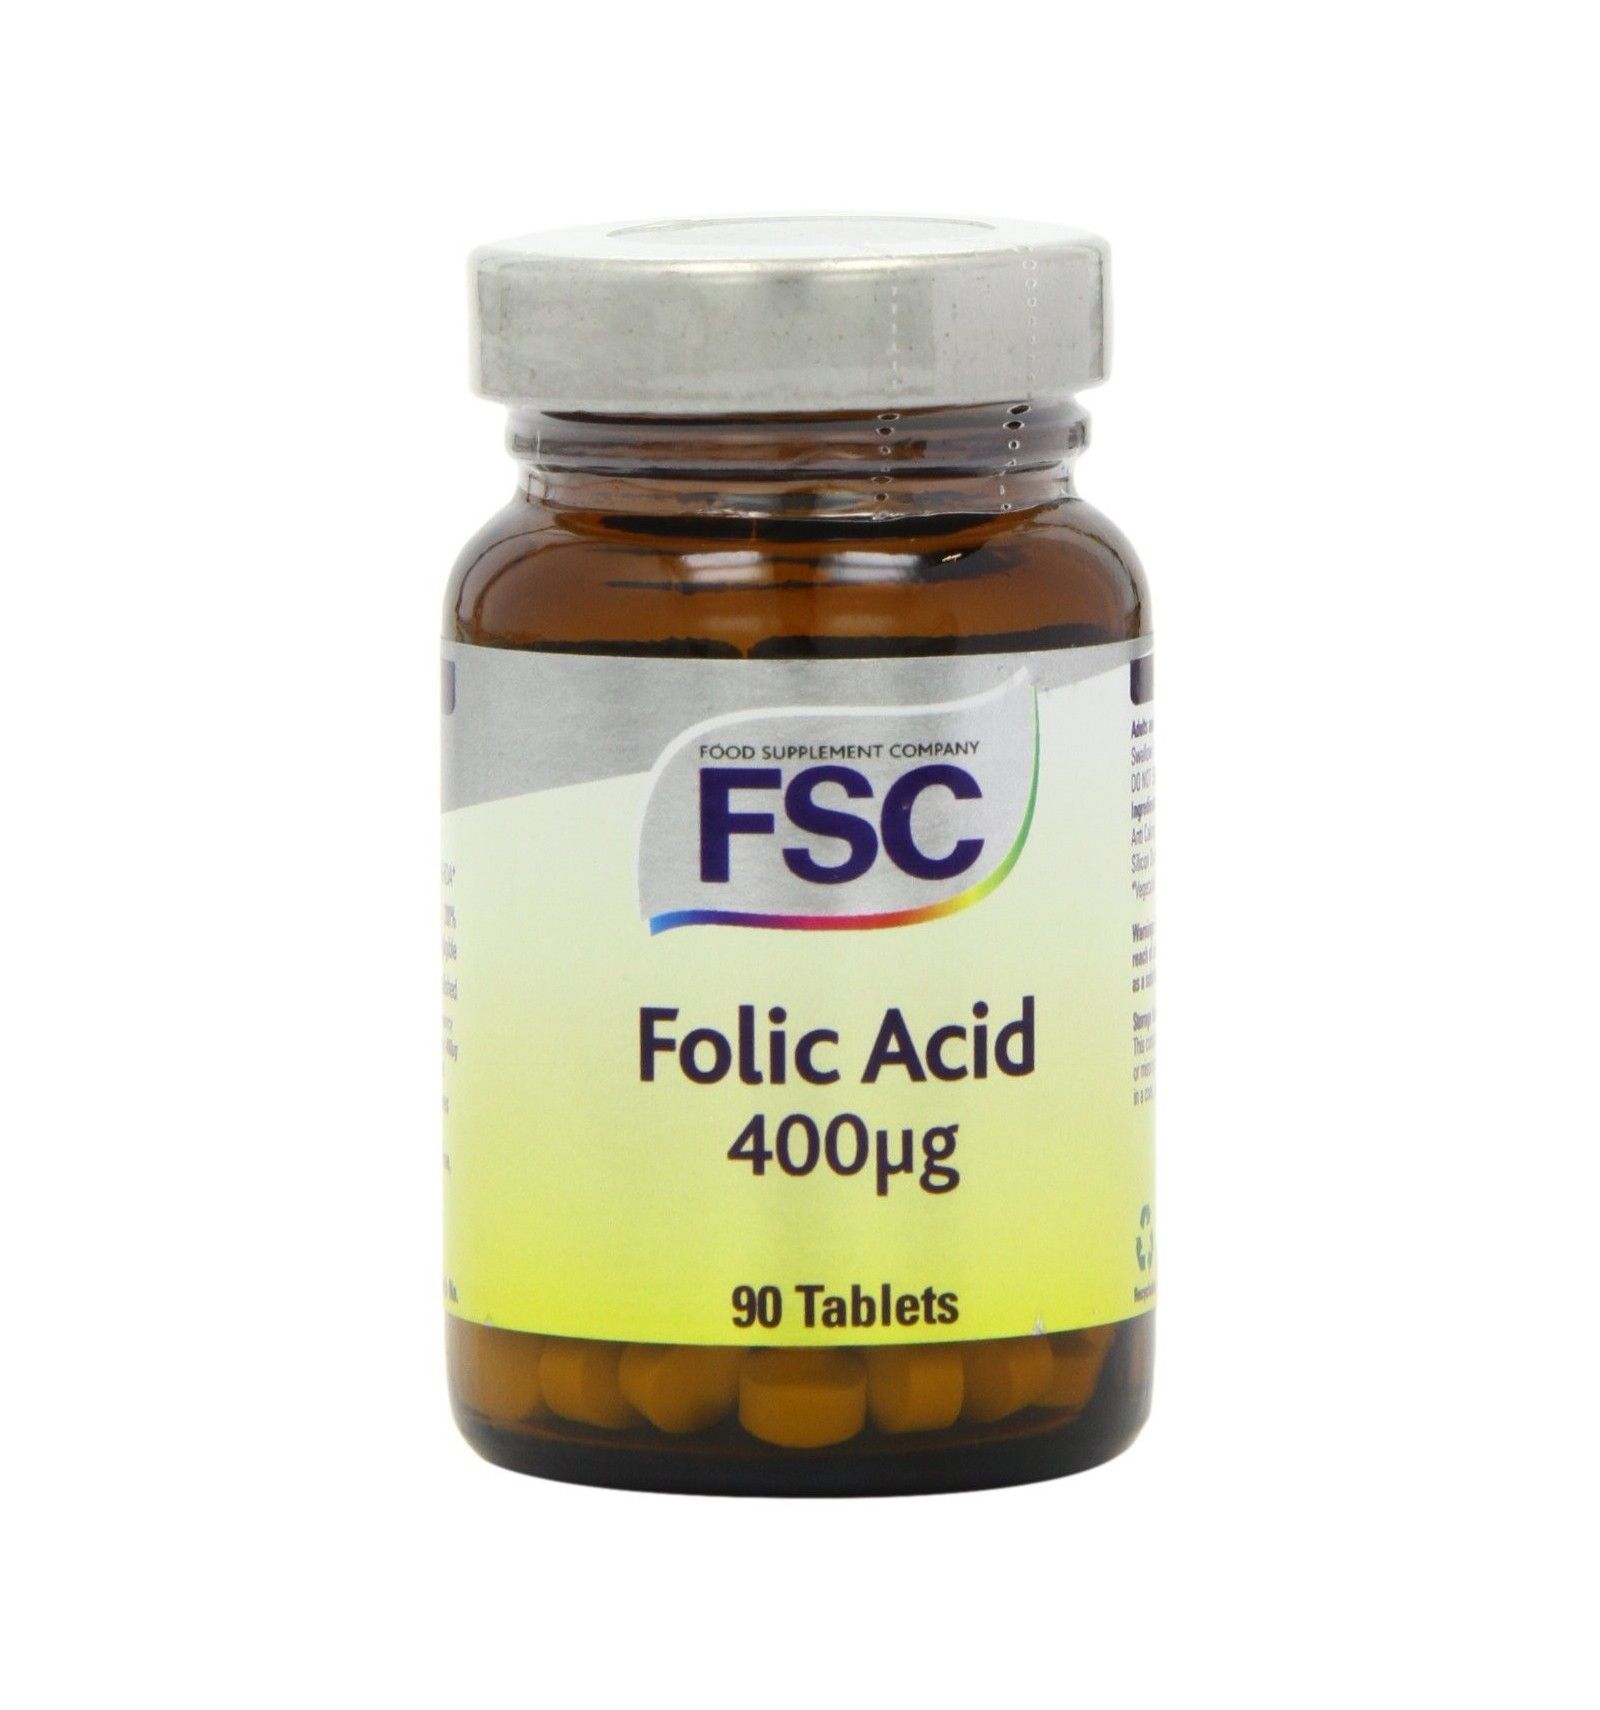 FSC Folic Acid 400ug - 90 Tablets